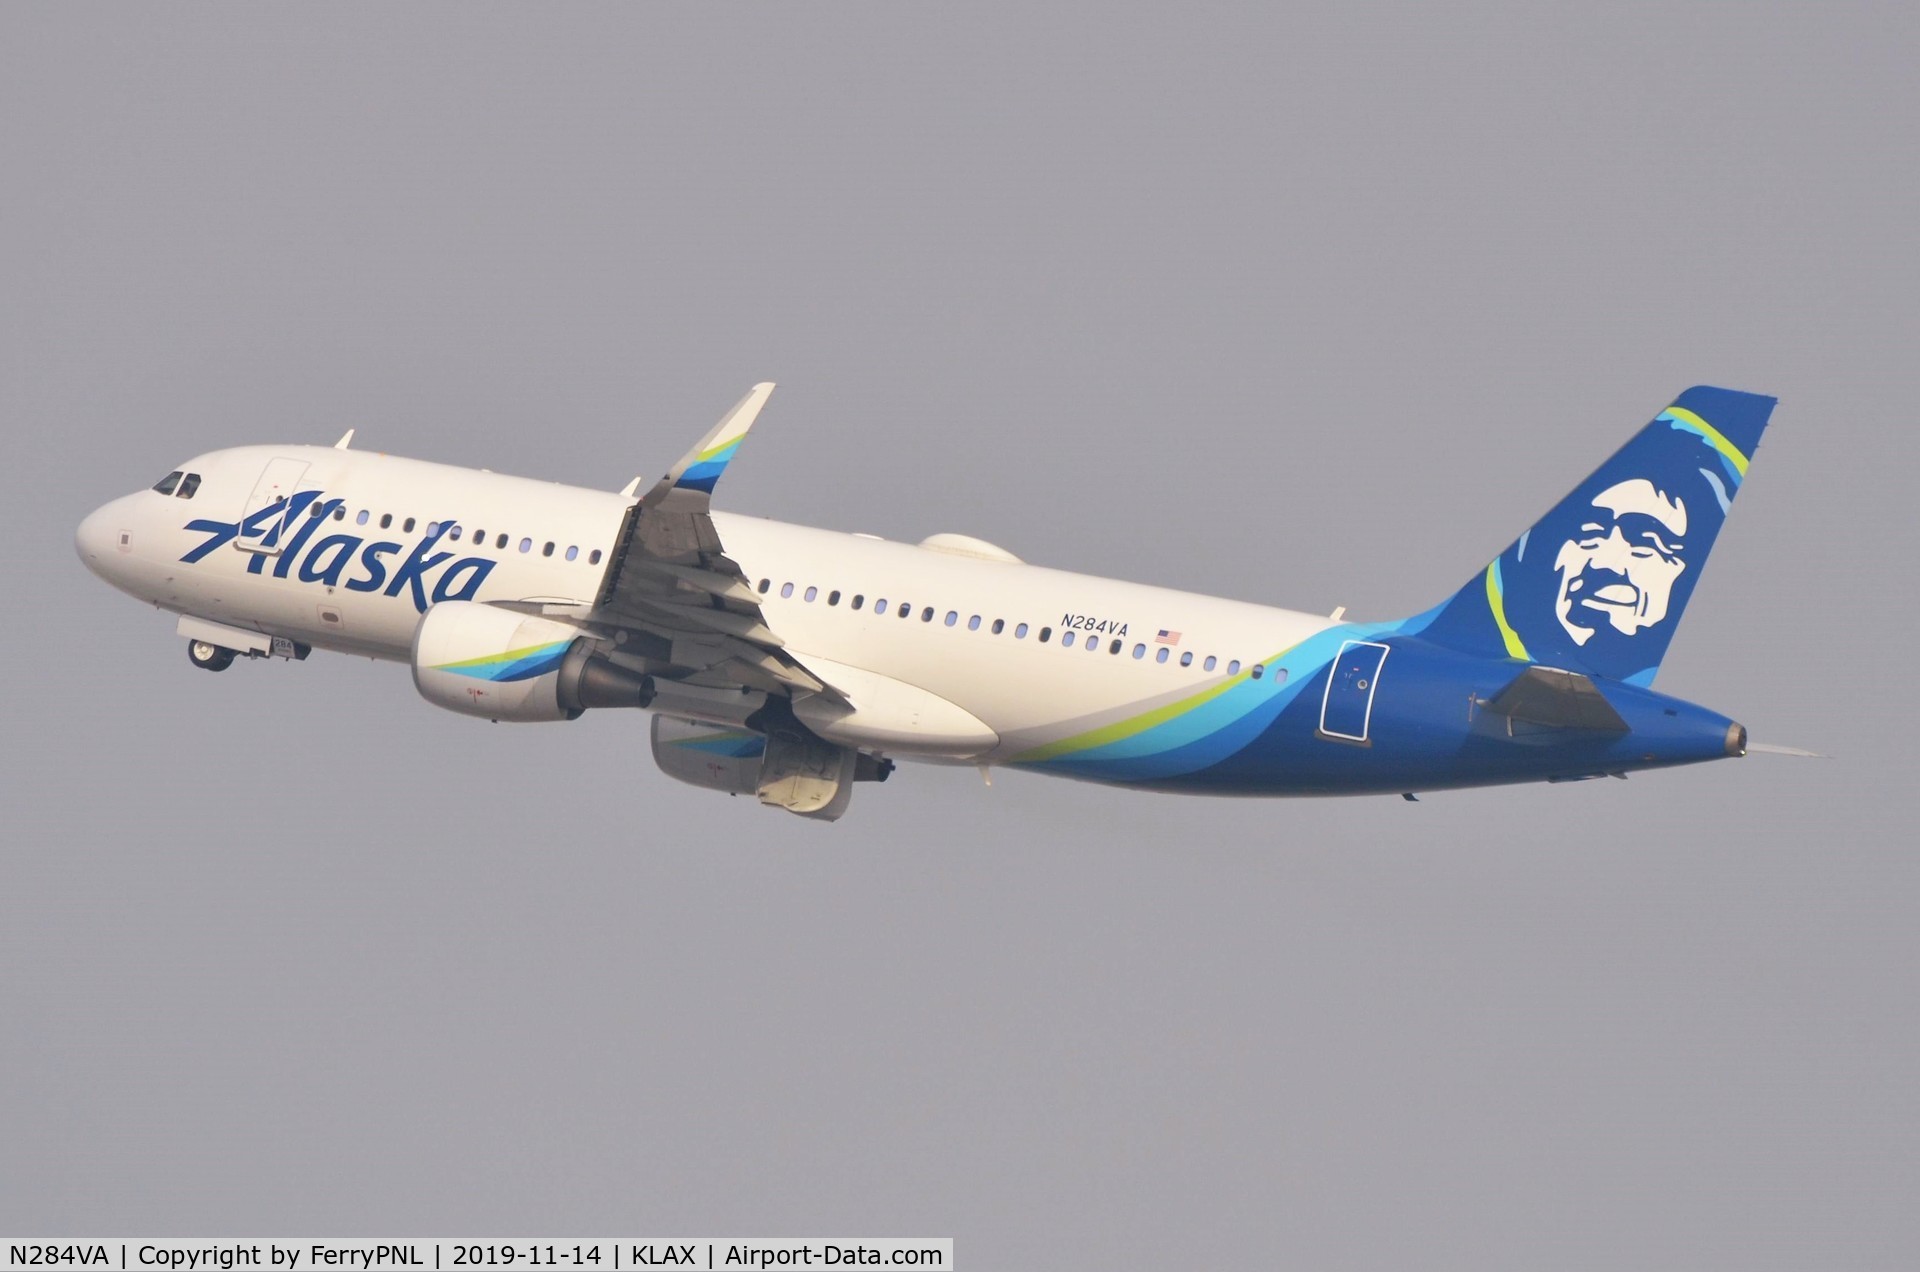 N284VA, 2015 Airbus A320-214 C/N 6835, Alaska A320 taking-off